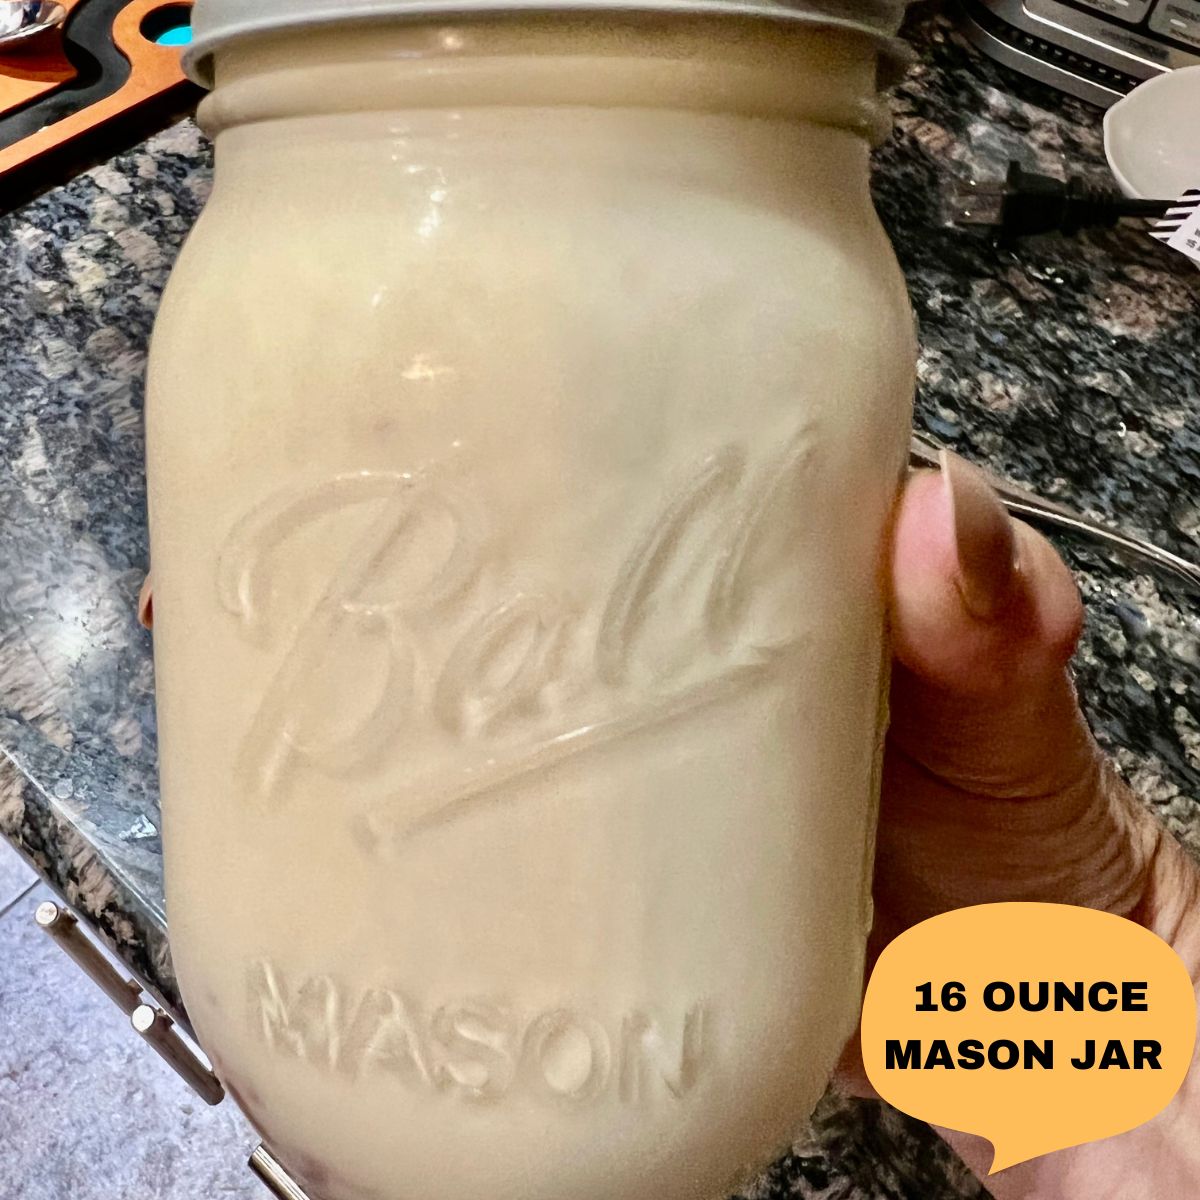 16 ounce glass mason jar filled with ice cream